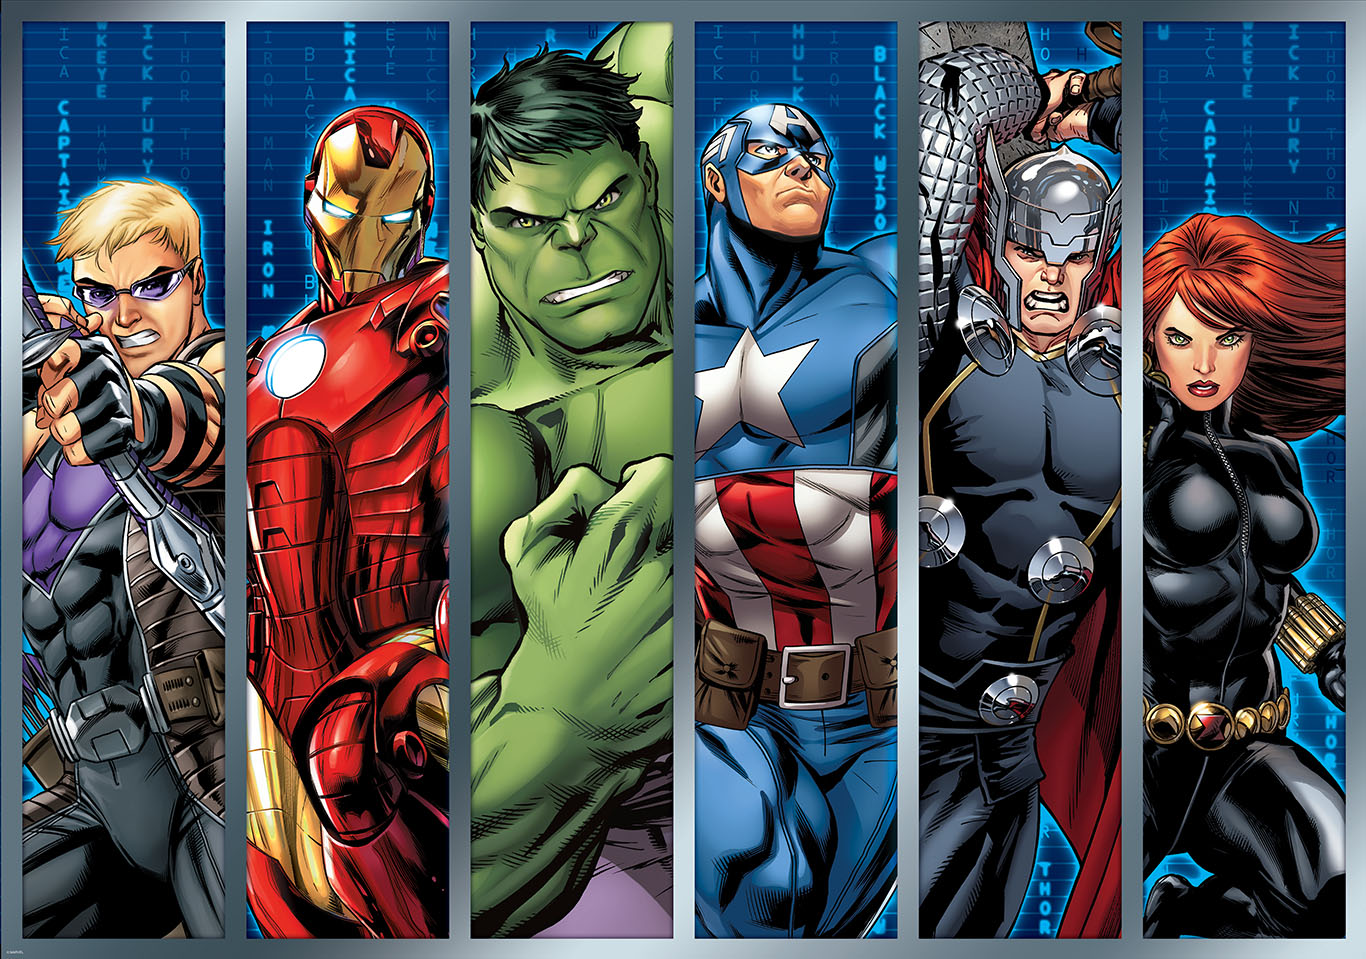 Marvel Avengers Assemble Strips Photo Wallpaper Wall Mural Cn 964p